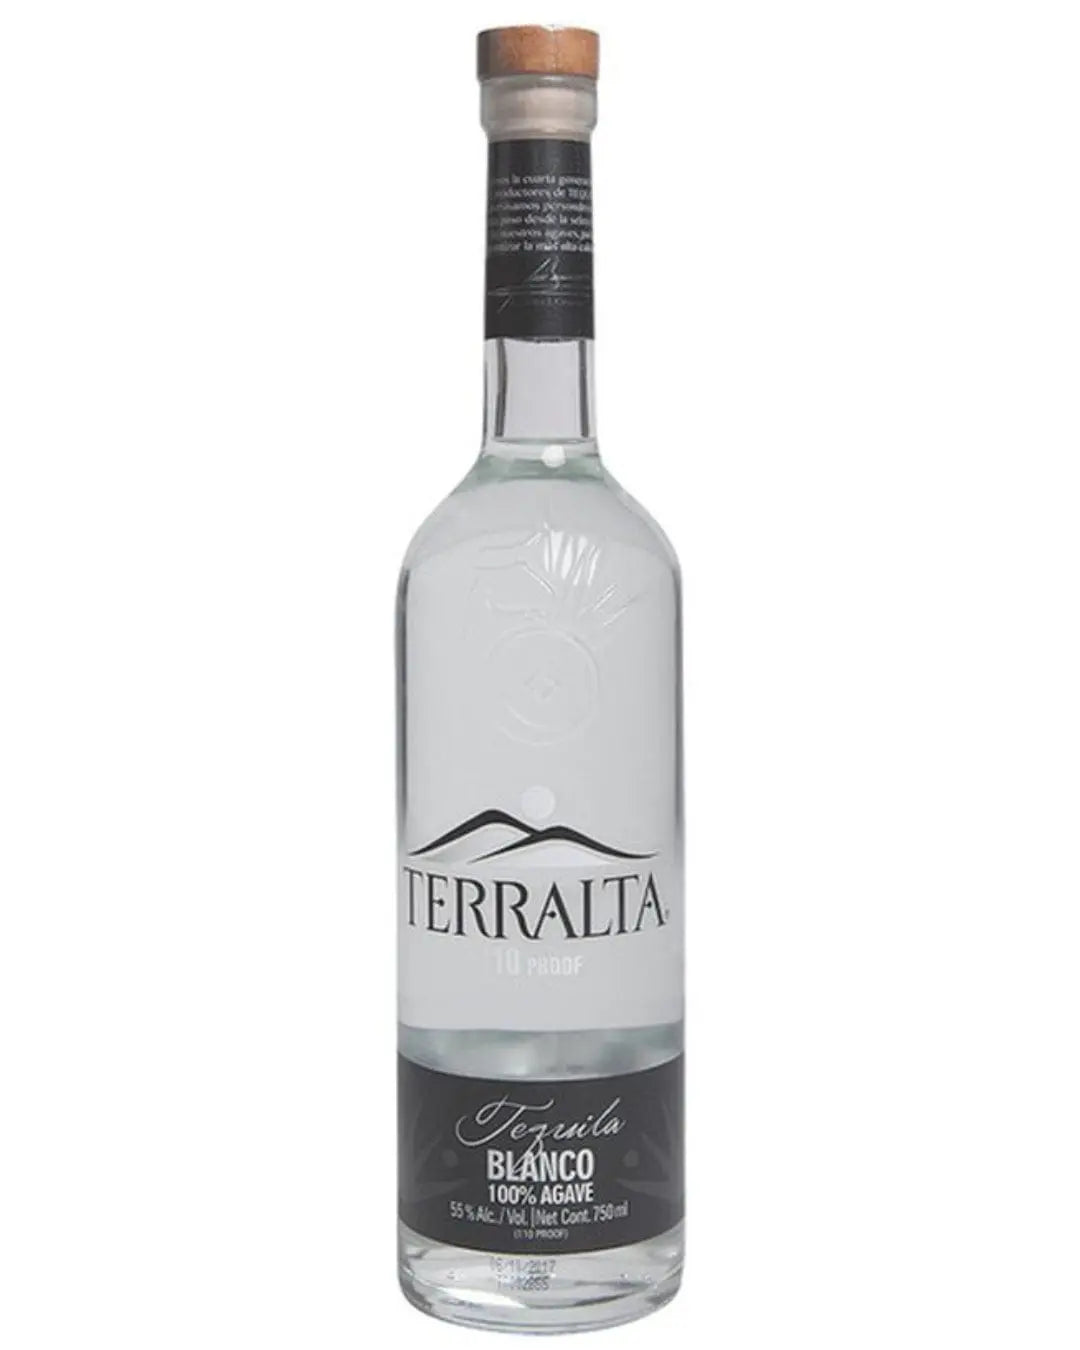 Terralta Blanco 110 Proof Blanco Tequila, 75 cl Tequila & Mezcal